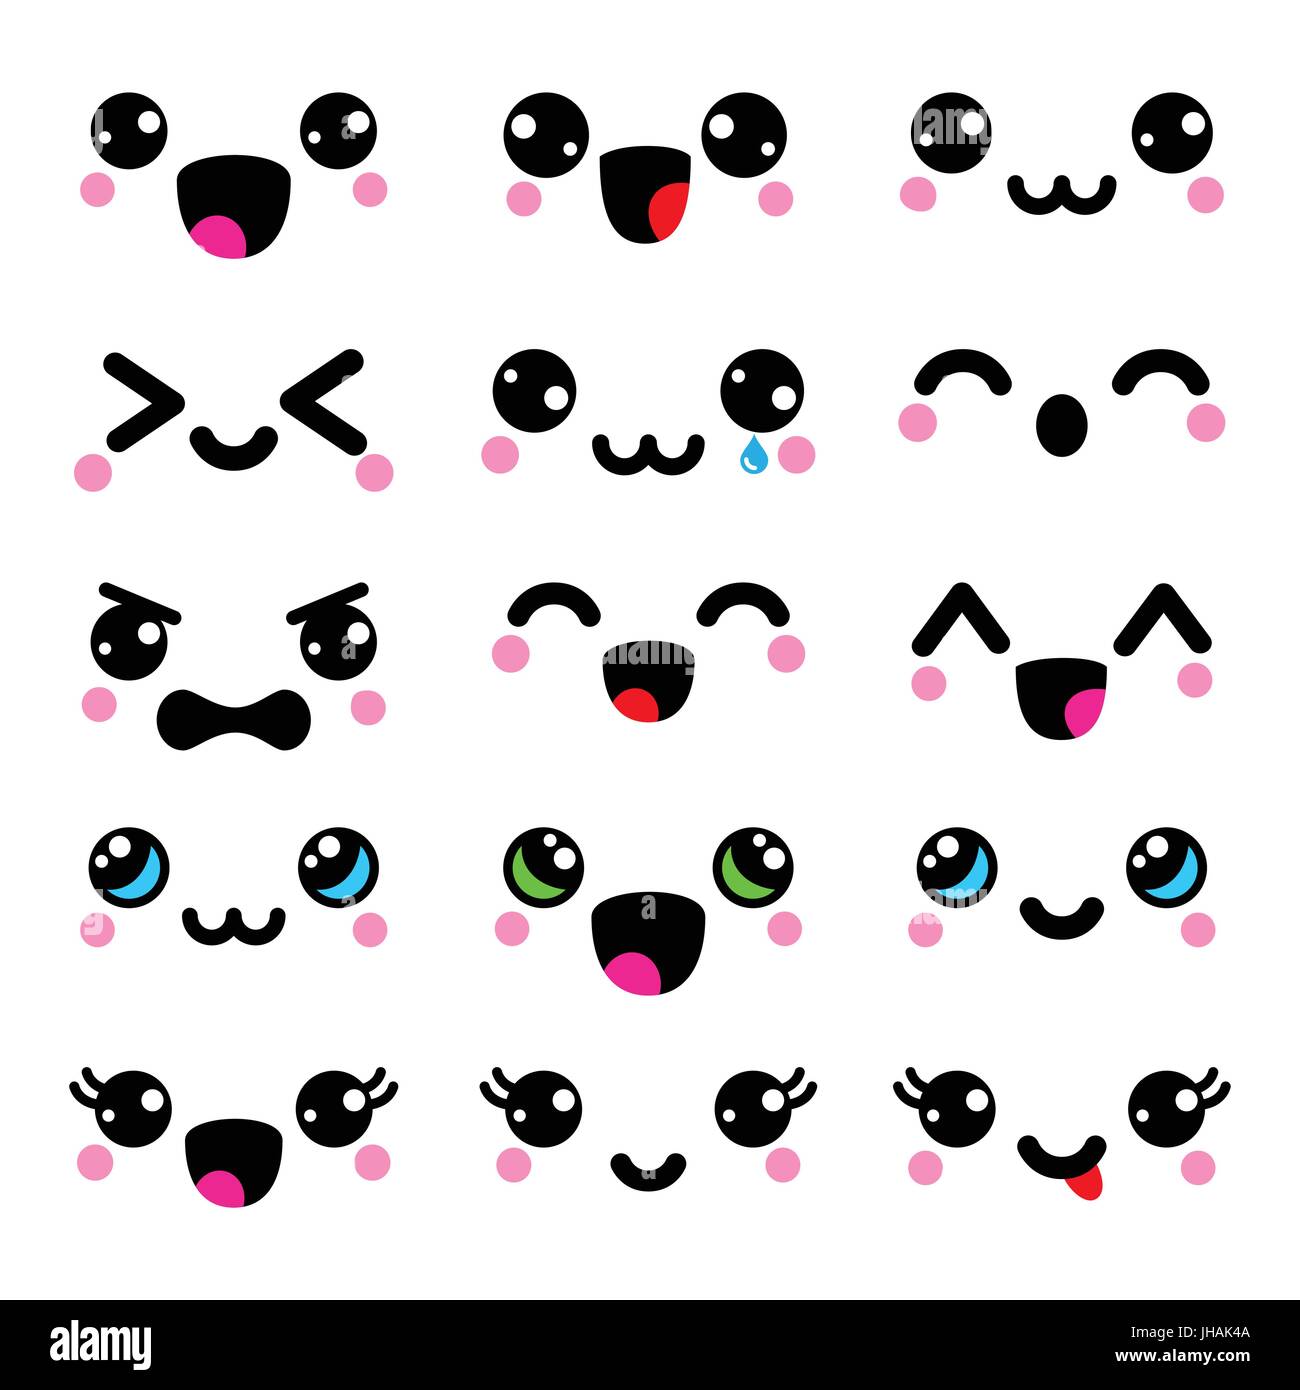 Kawaii cute faces, Kawaii emoticons, adorable characters design